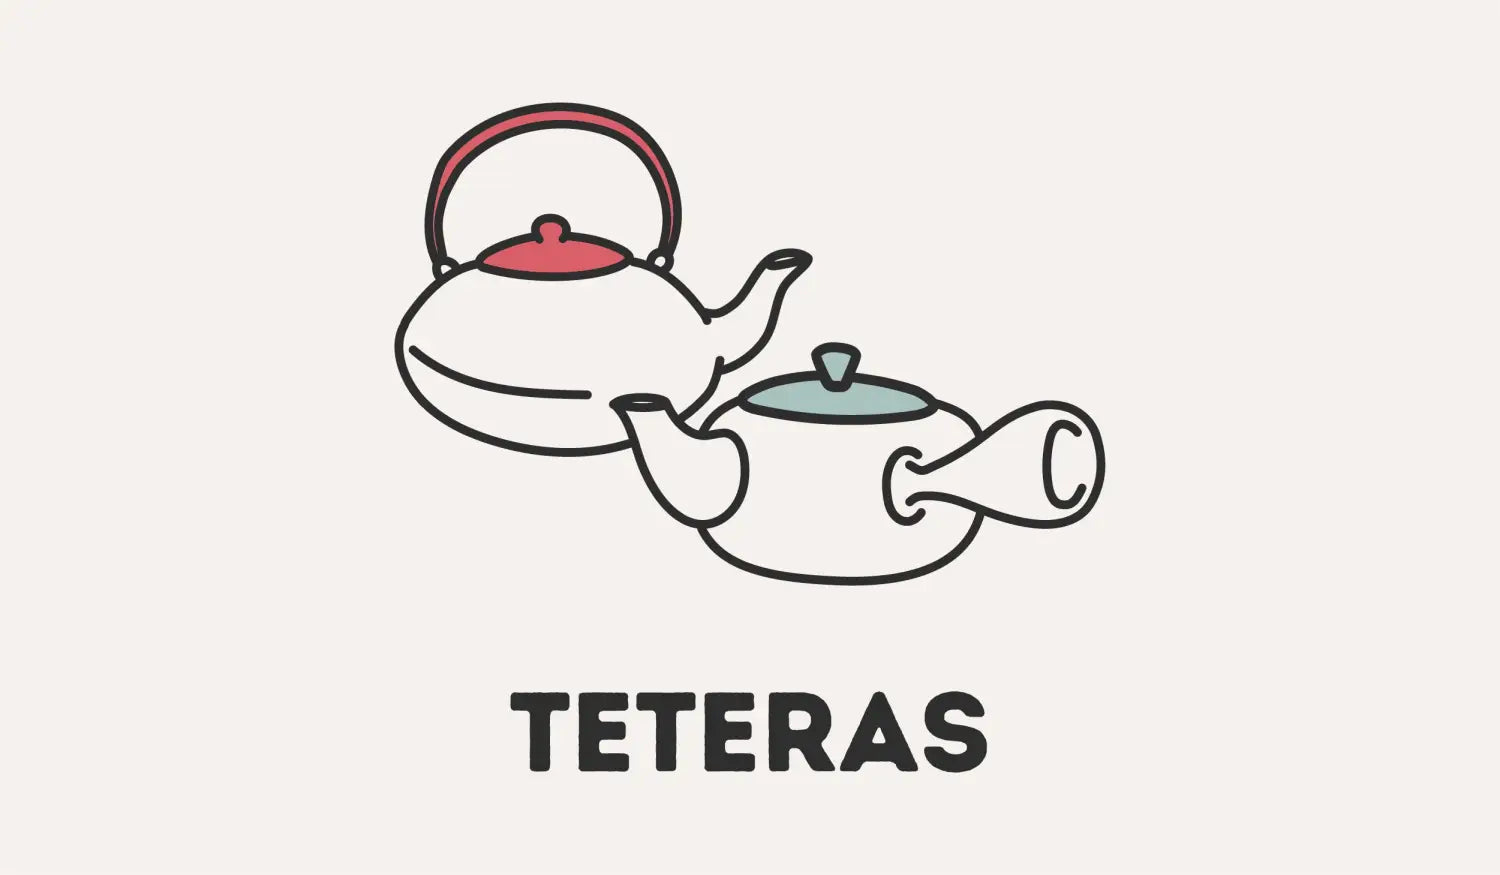 Teteras